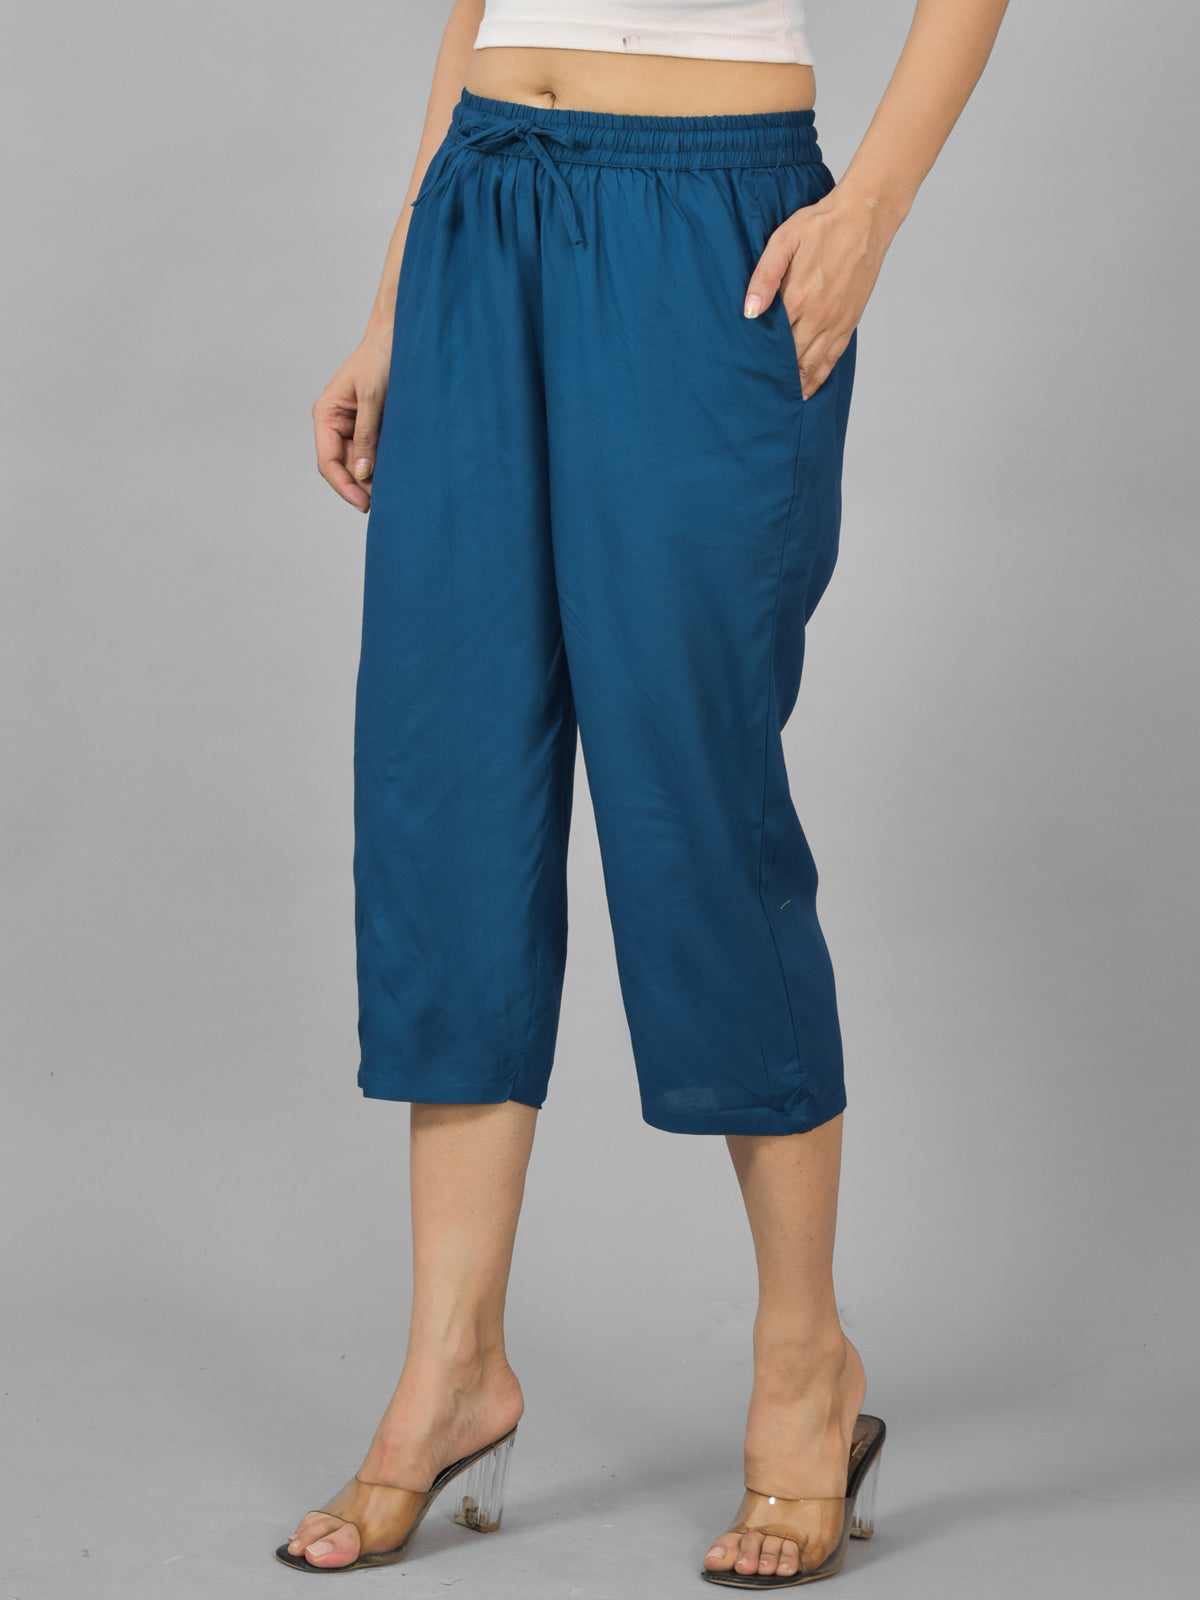 Women Teal Blue Rayon Calf Length Culottes Trouser